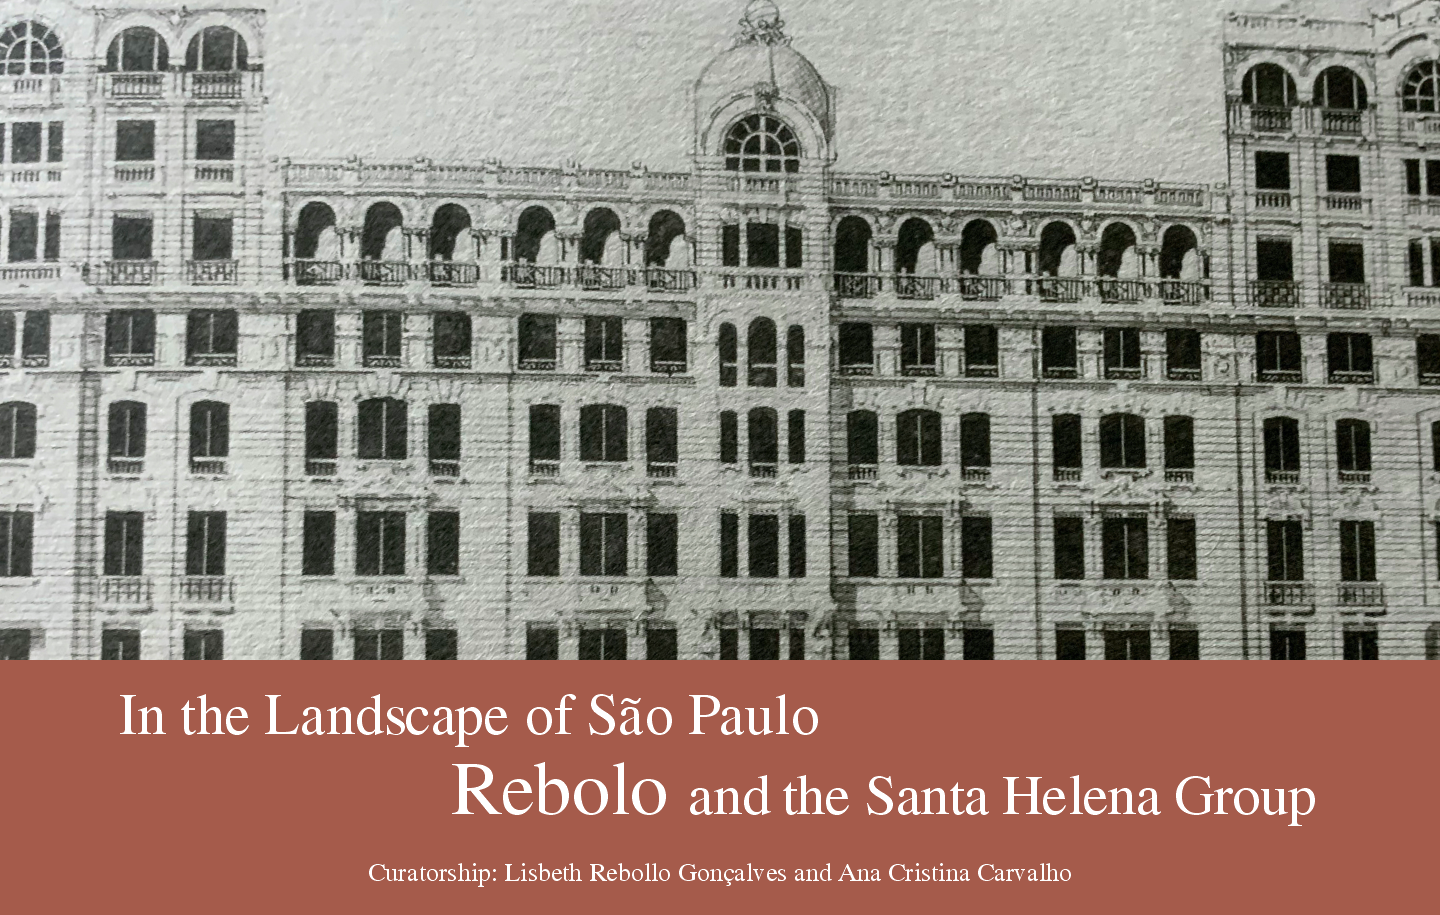 In the Landscape of São Paulo: Rebolo and the Santa Helena Group - Curatorship: Lisbeth Rebollo Gonçalves and Ana Cristina Carvalho